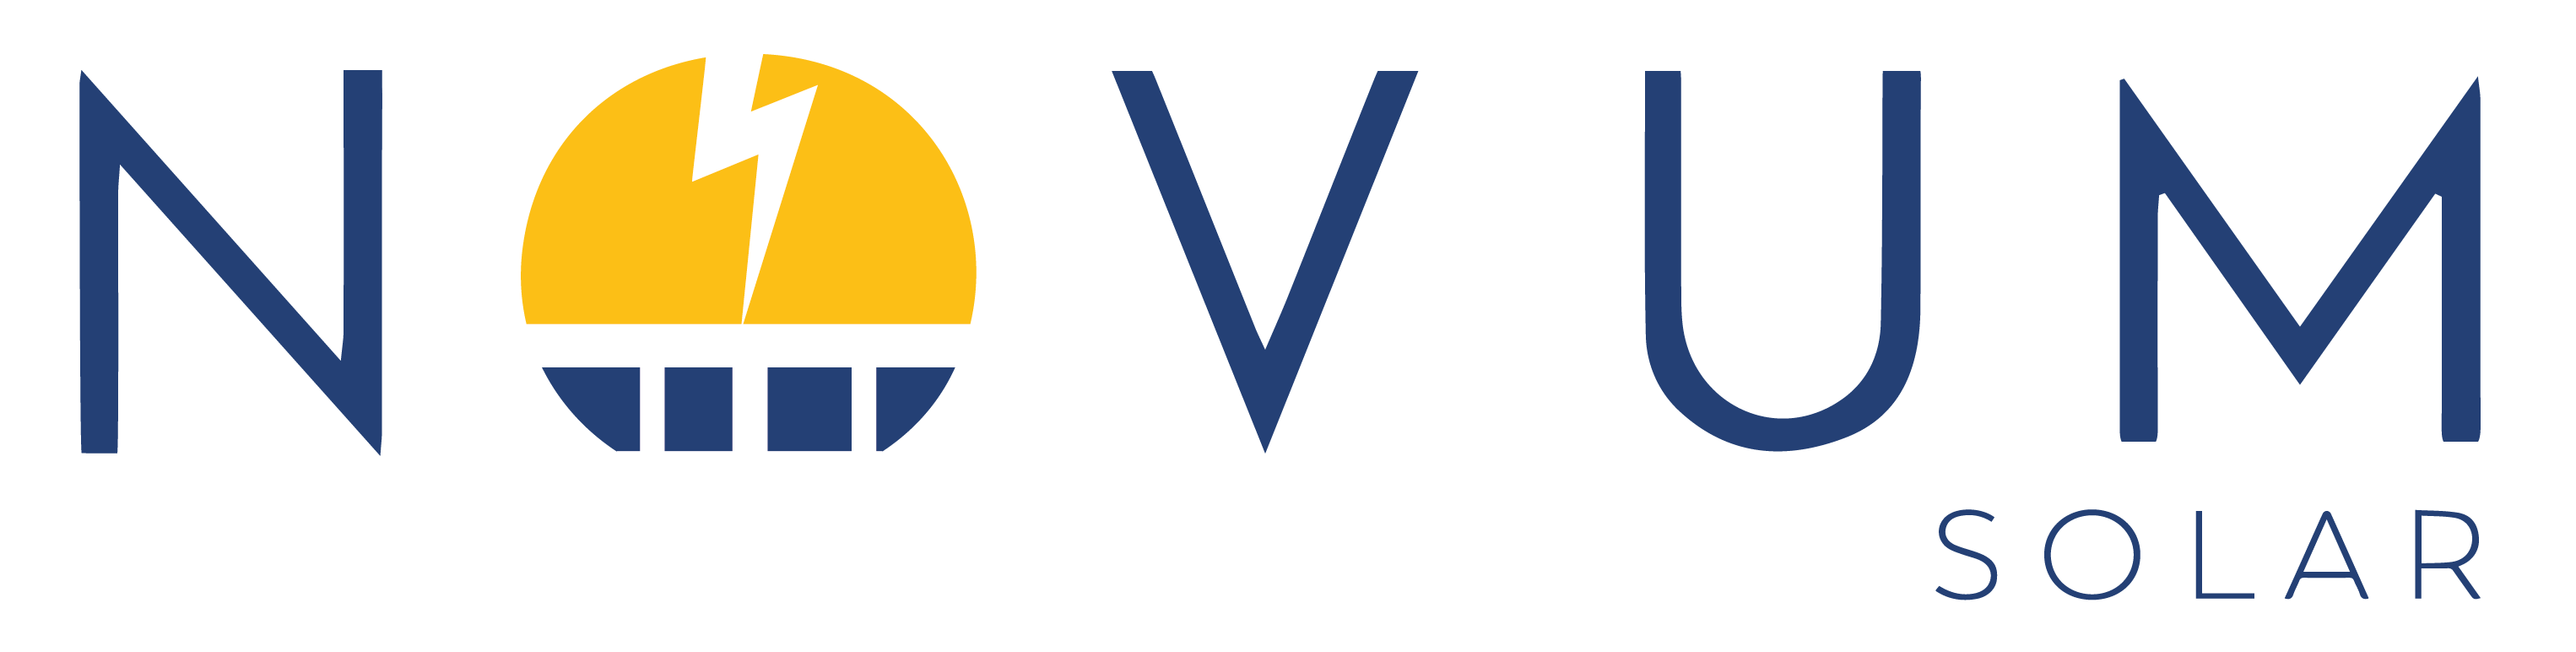 logo (8)